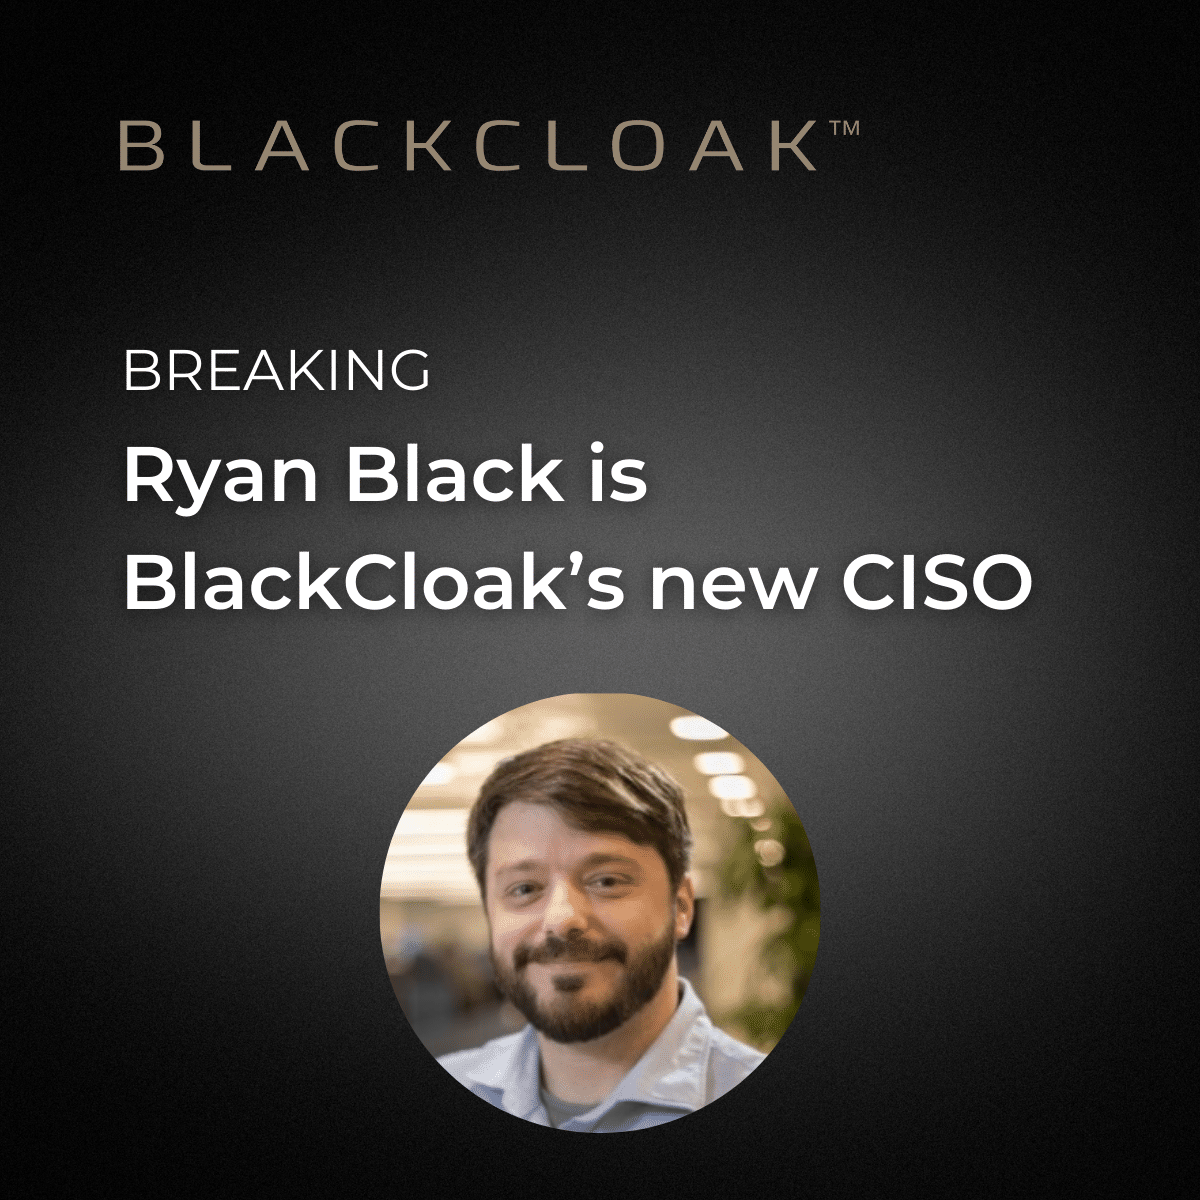 Ryan Black is BlackCloak's new CISO